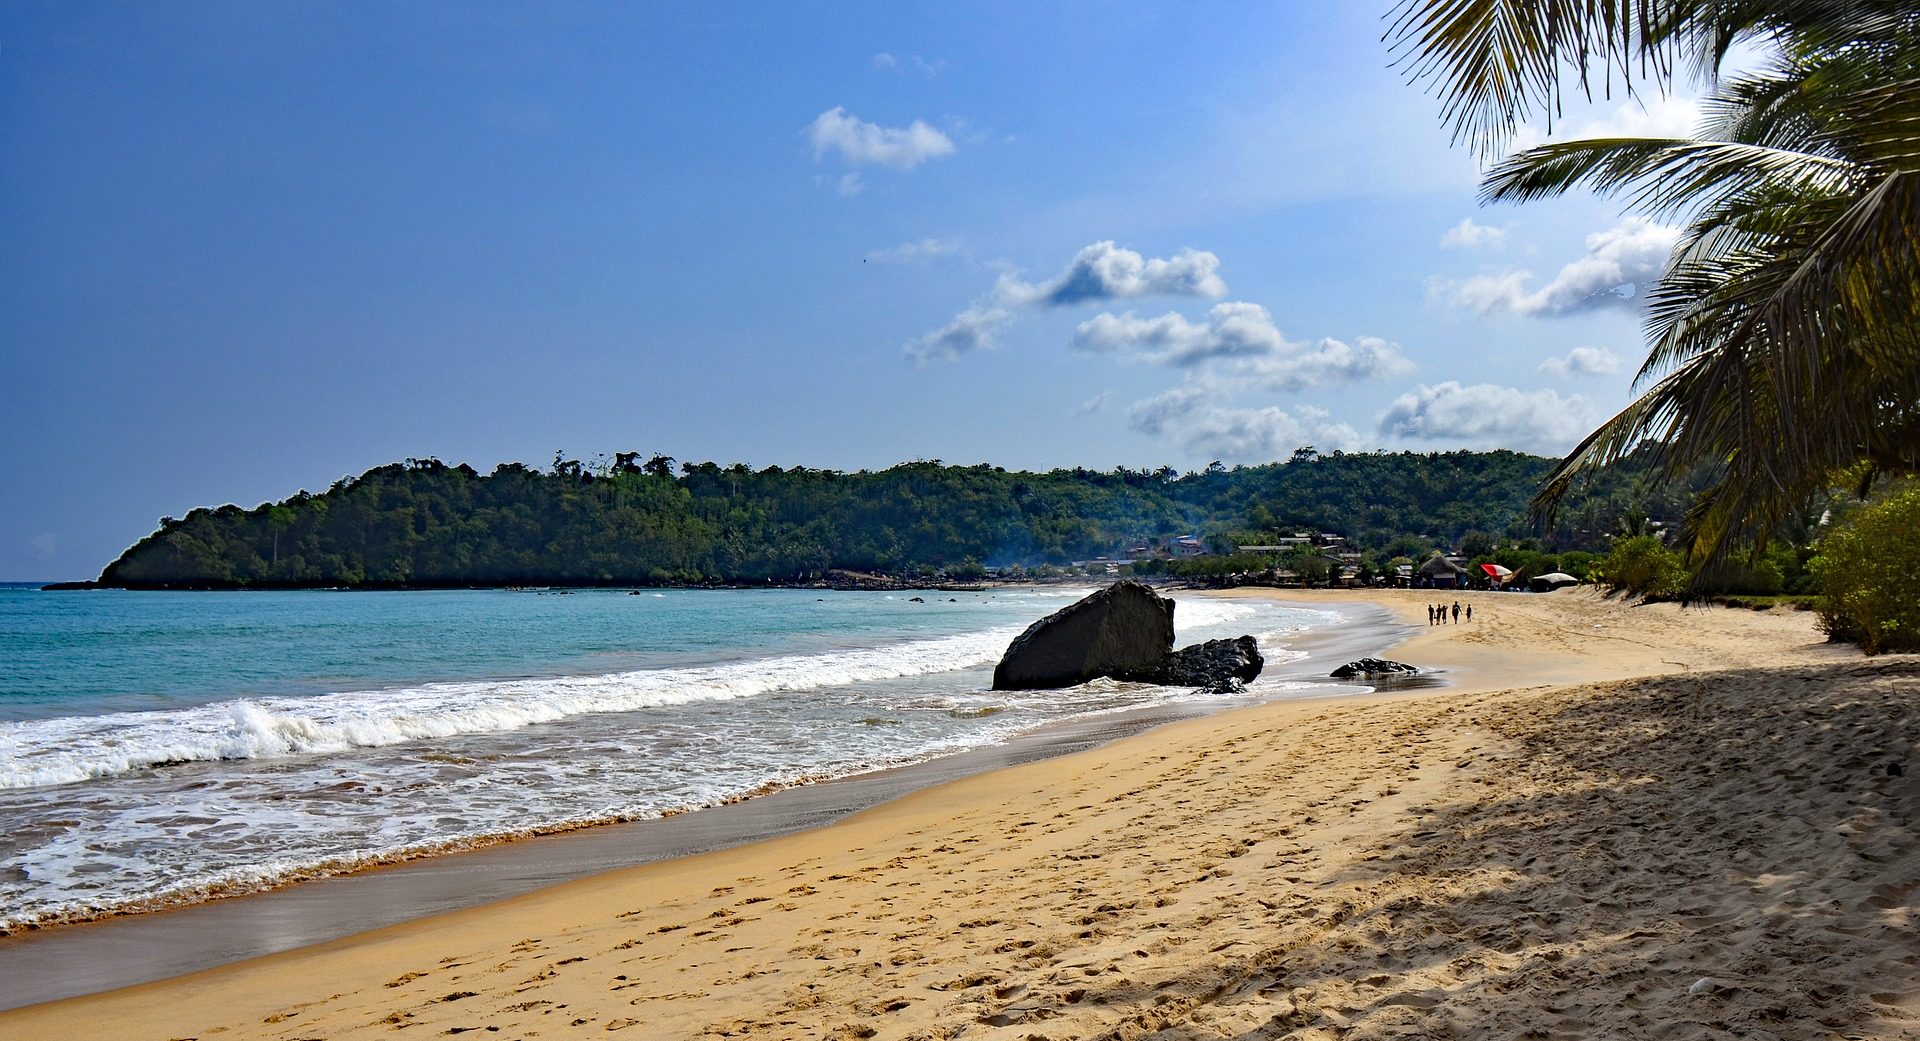 Beach in Ghana, West Africa